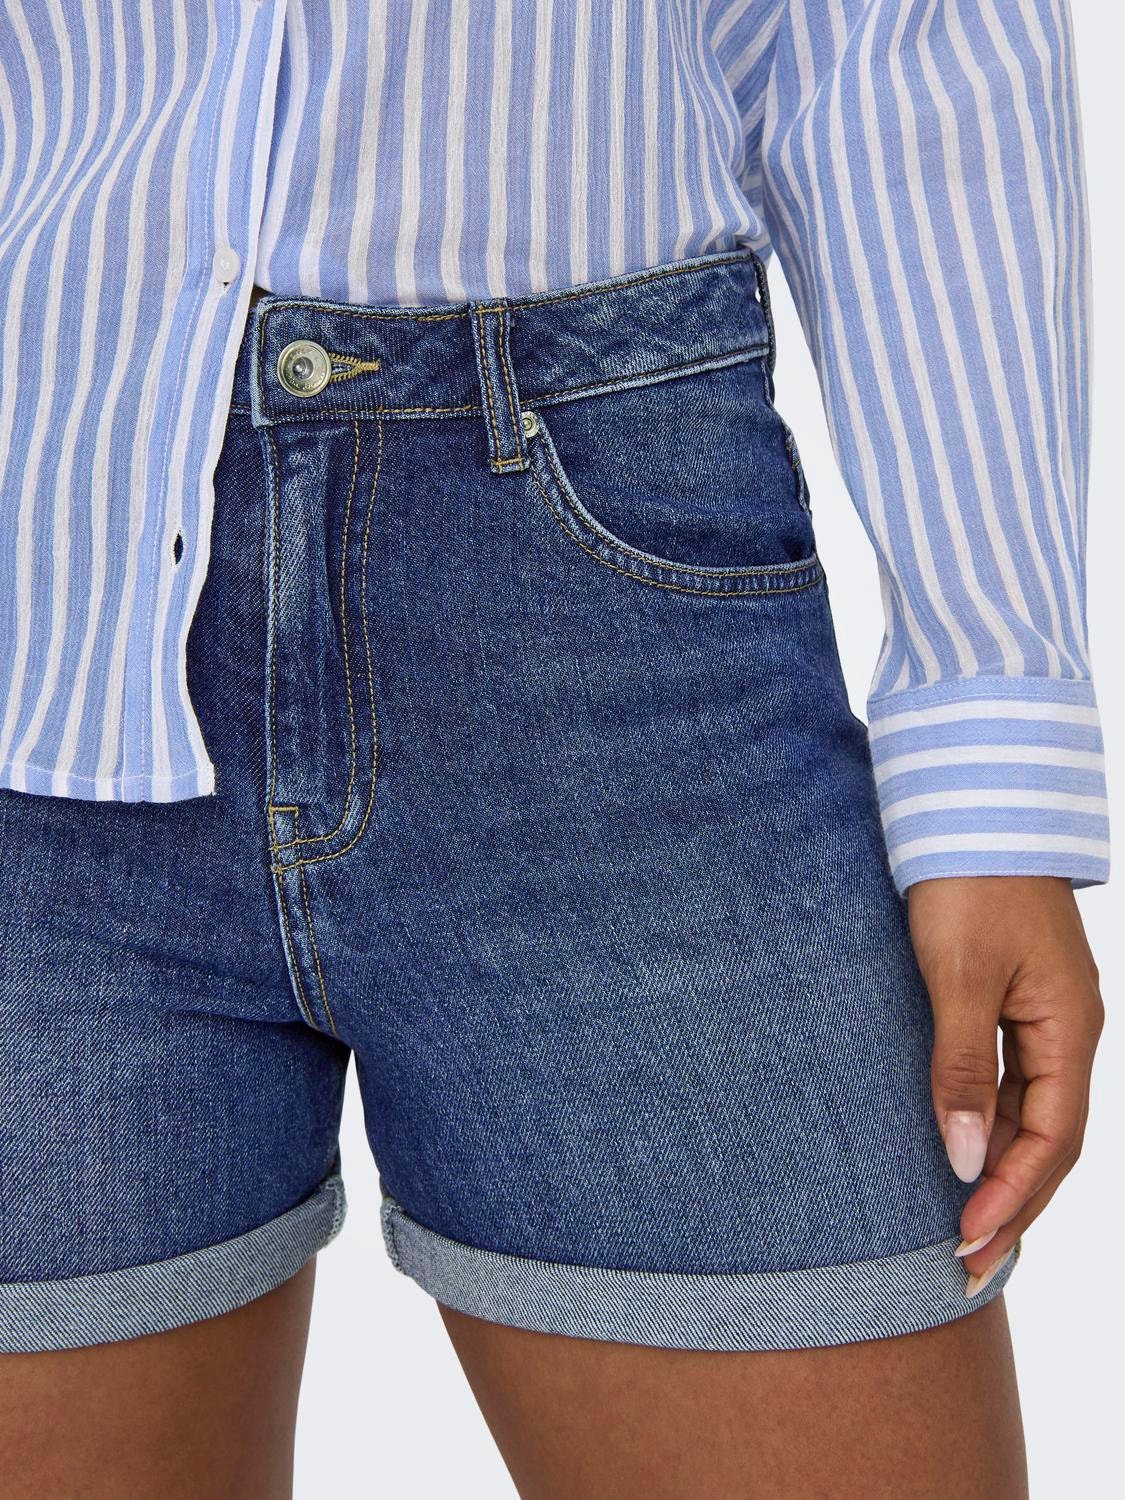 ONLY Mini denim shorts -Medium Blue Denim - 15321381